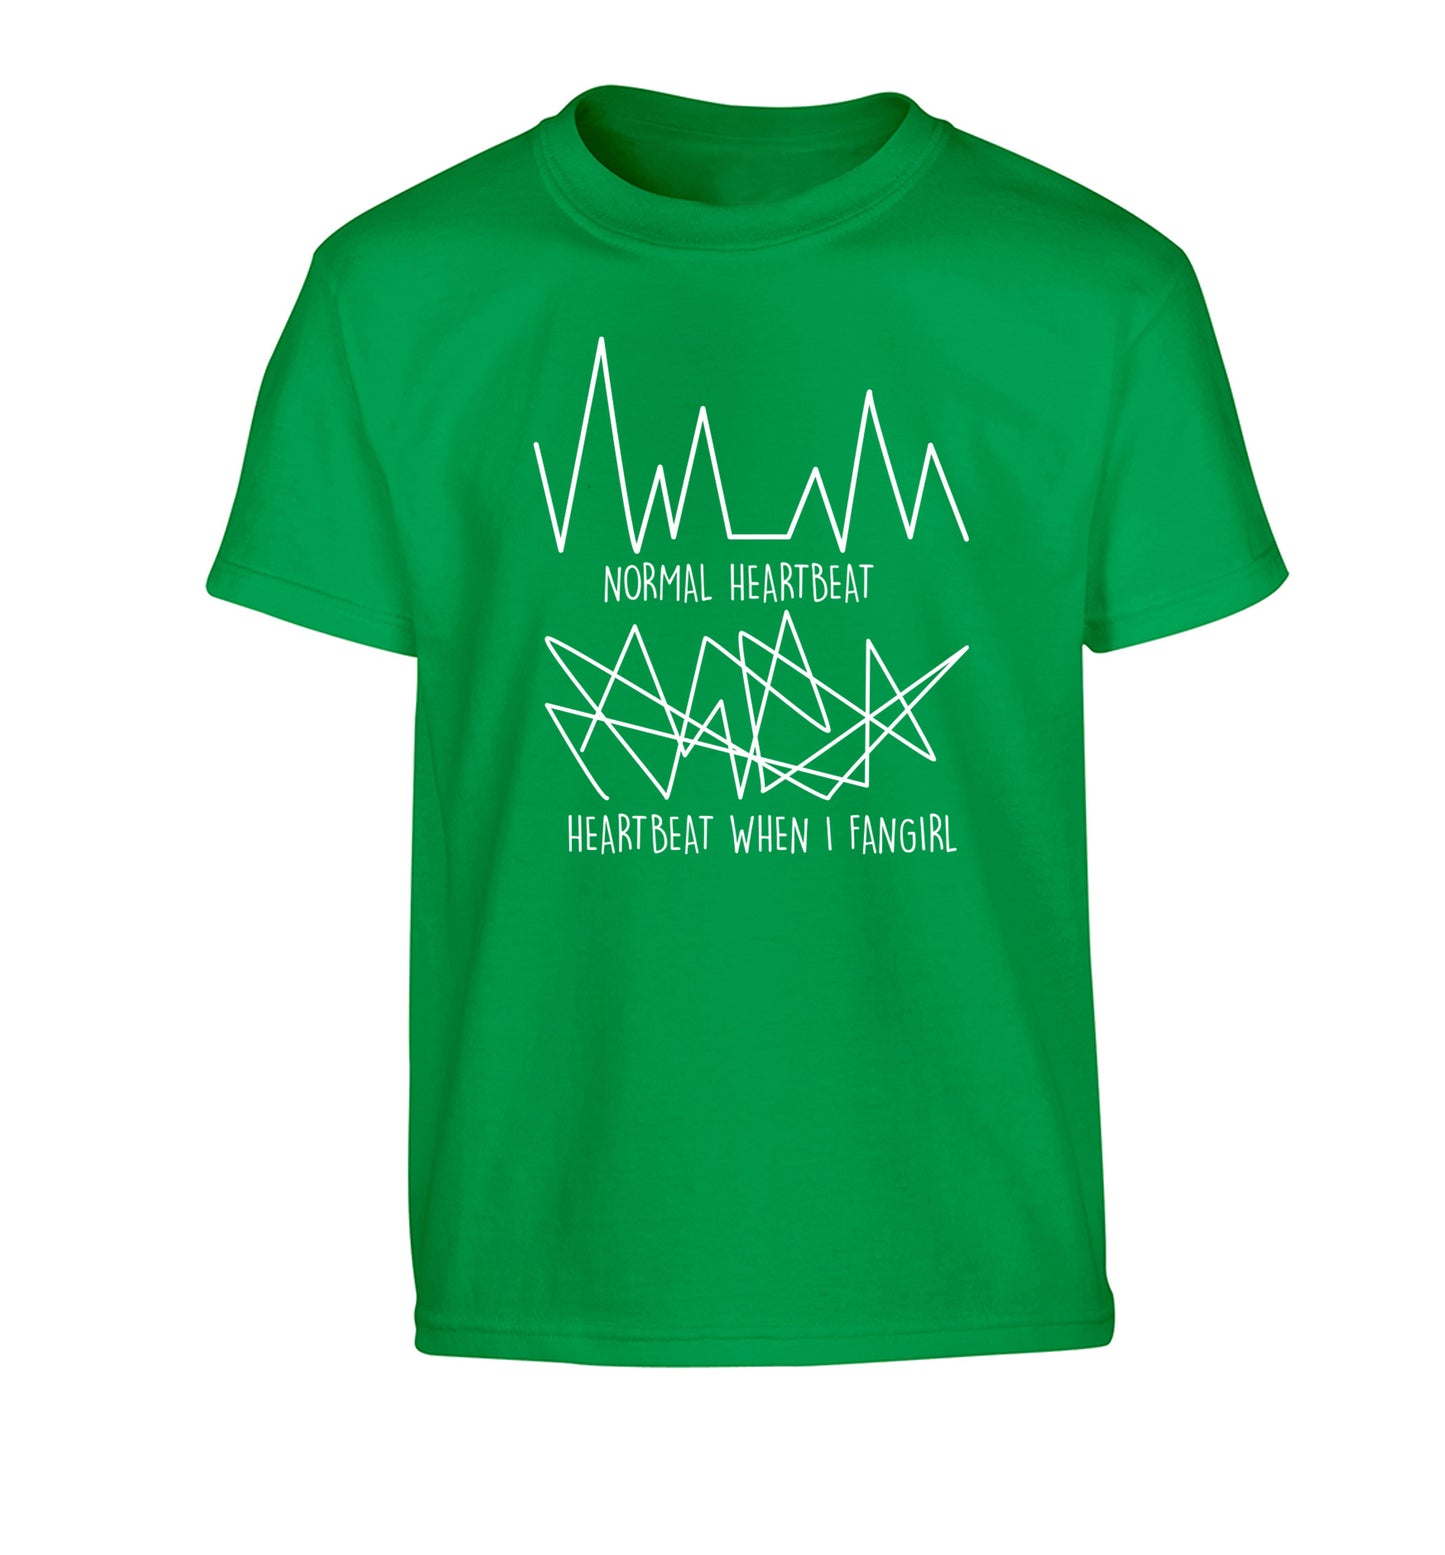 Normal heartbeat heartbeat when I fangirl Children's green Tshirt 12-14 Years